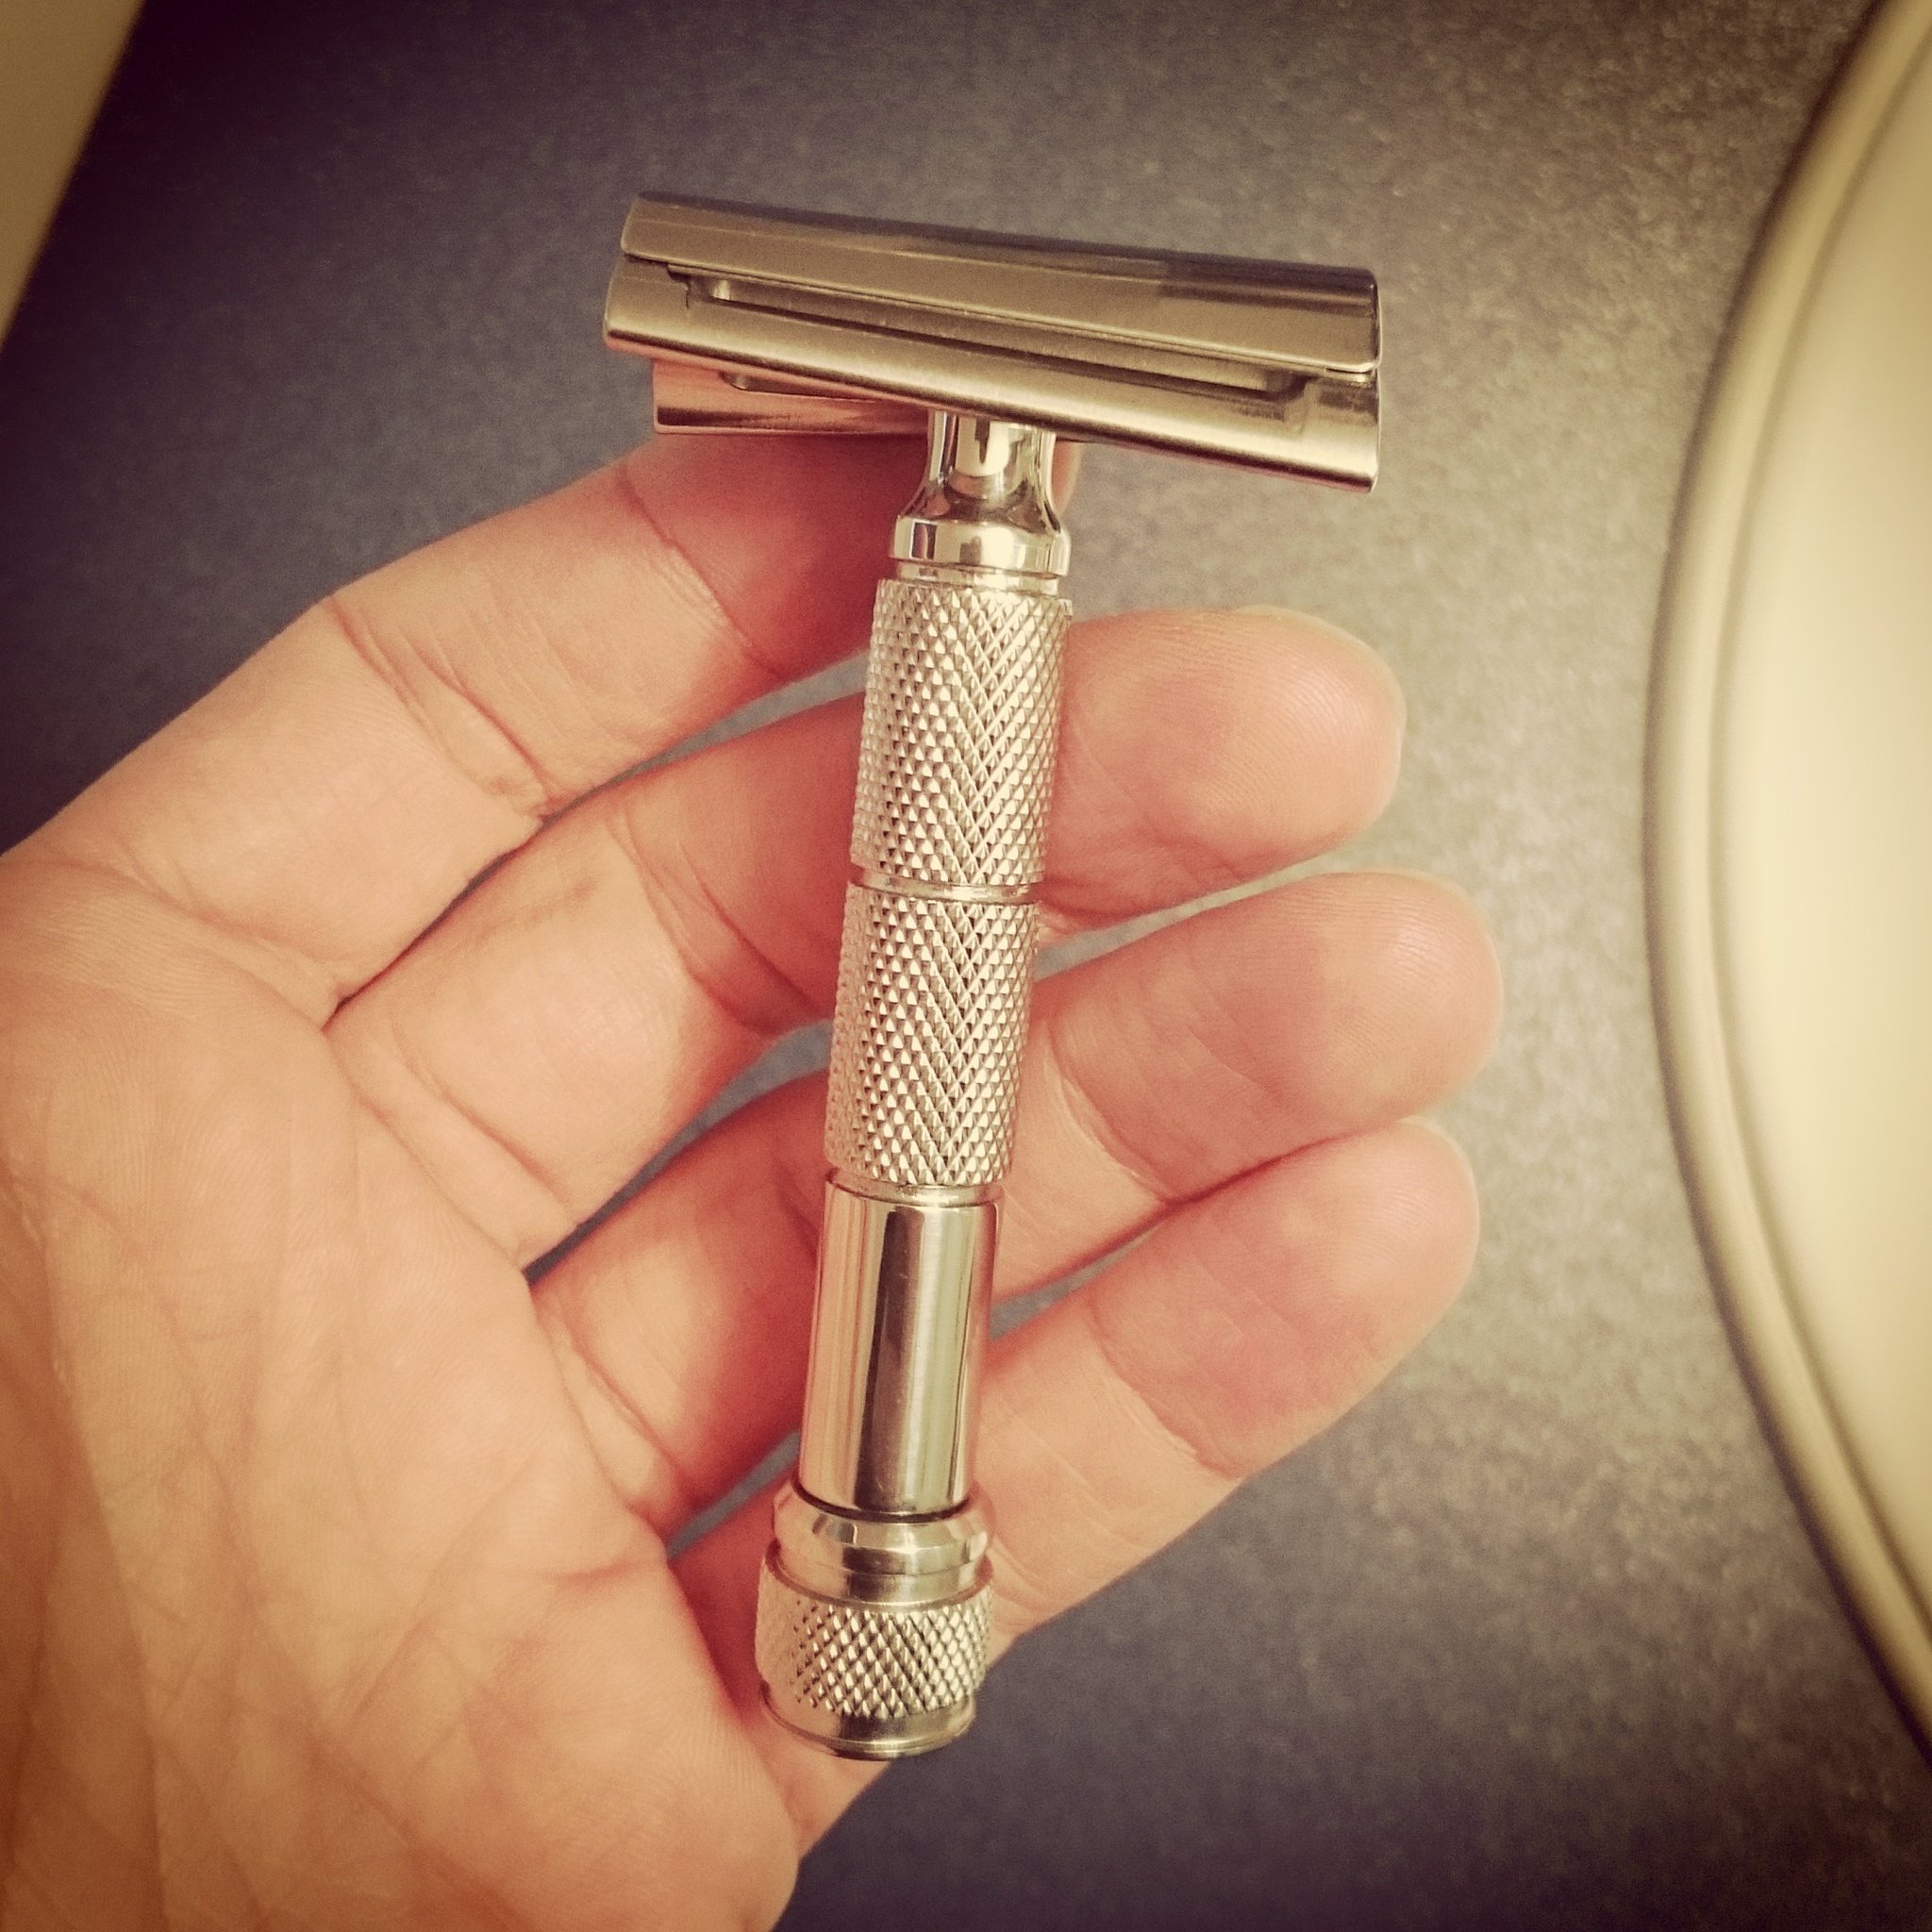 I'm not sure I can make a better shaving razor #honestly” .